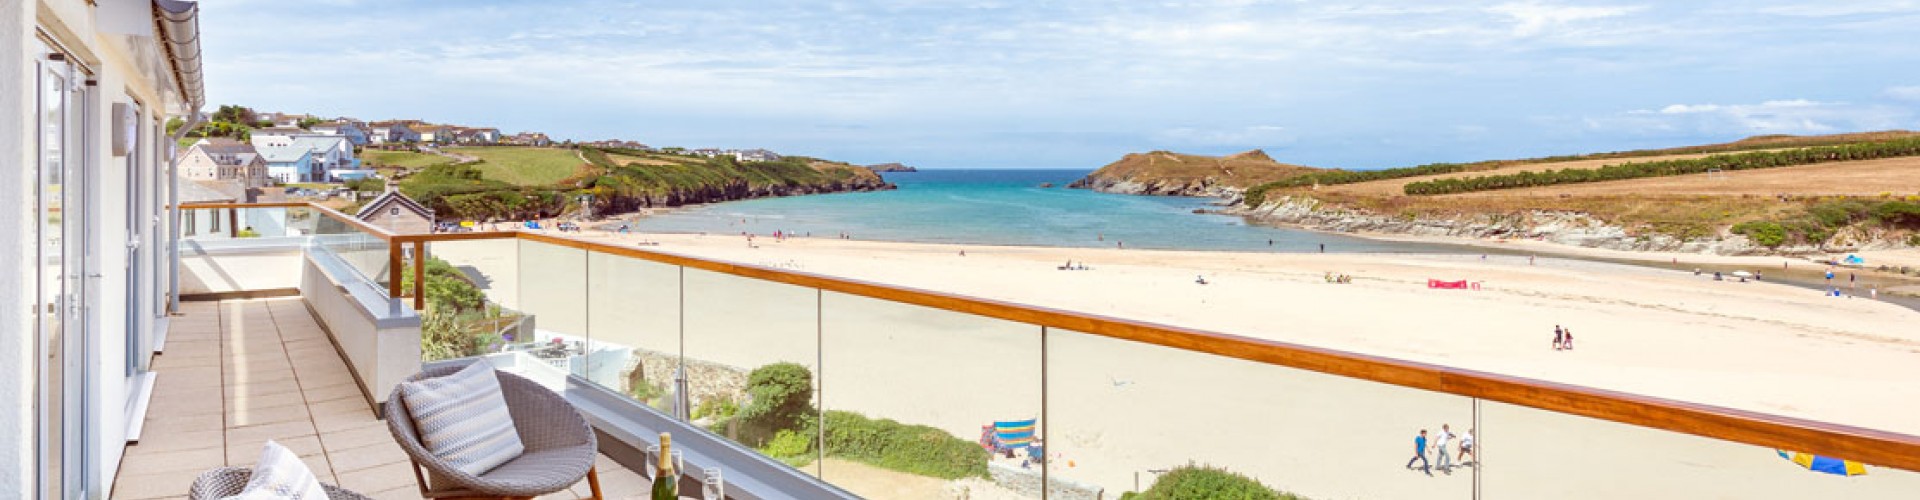 Cornish beach scene from balcony